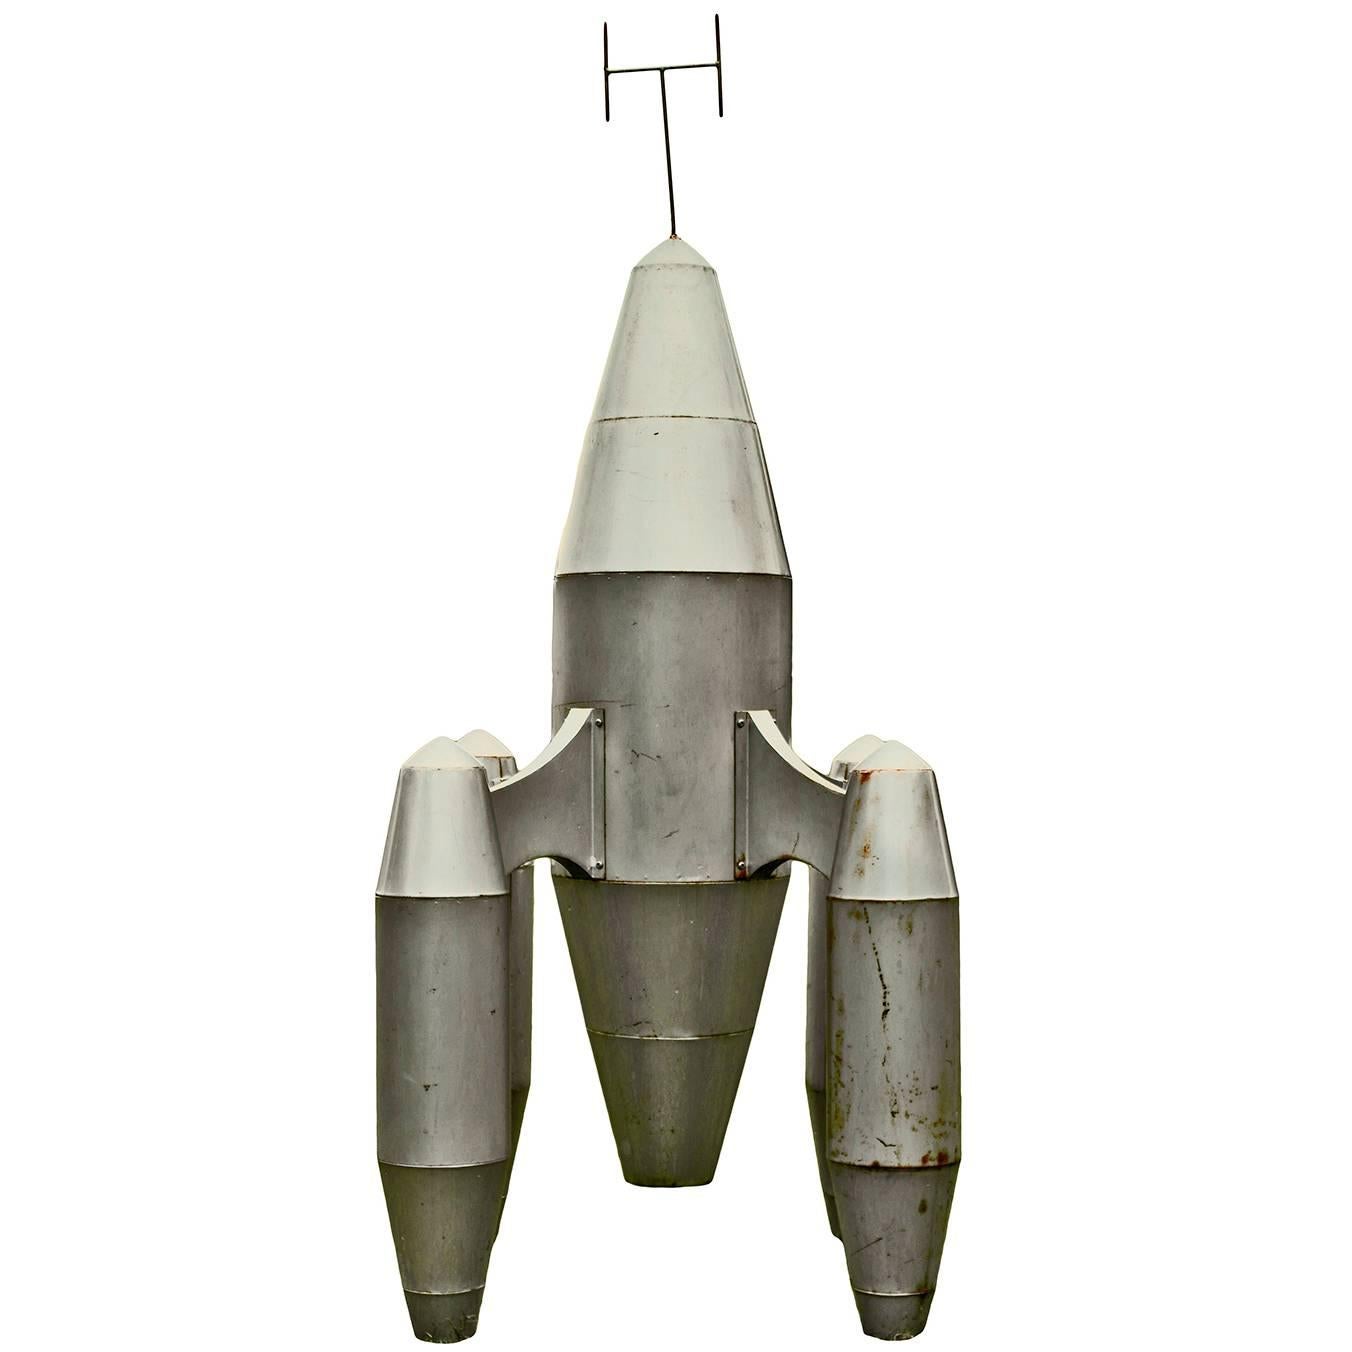 Vintage Large-Scale Model Rocket Dan Dare Era